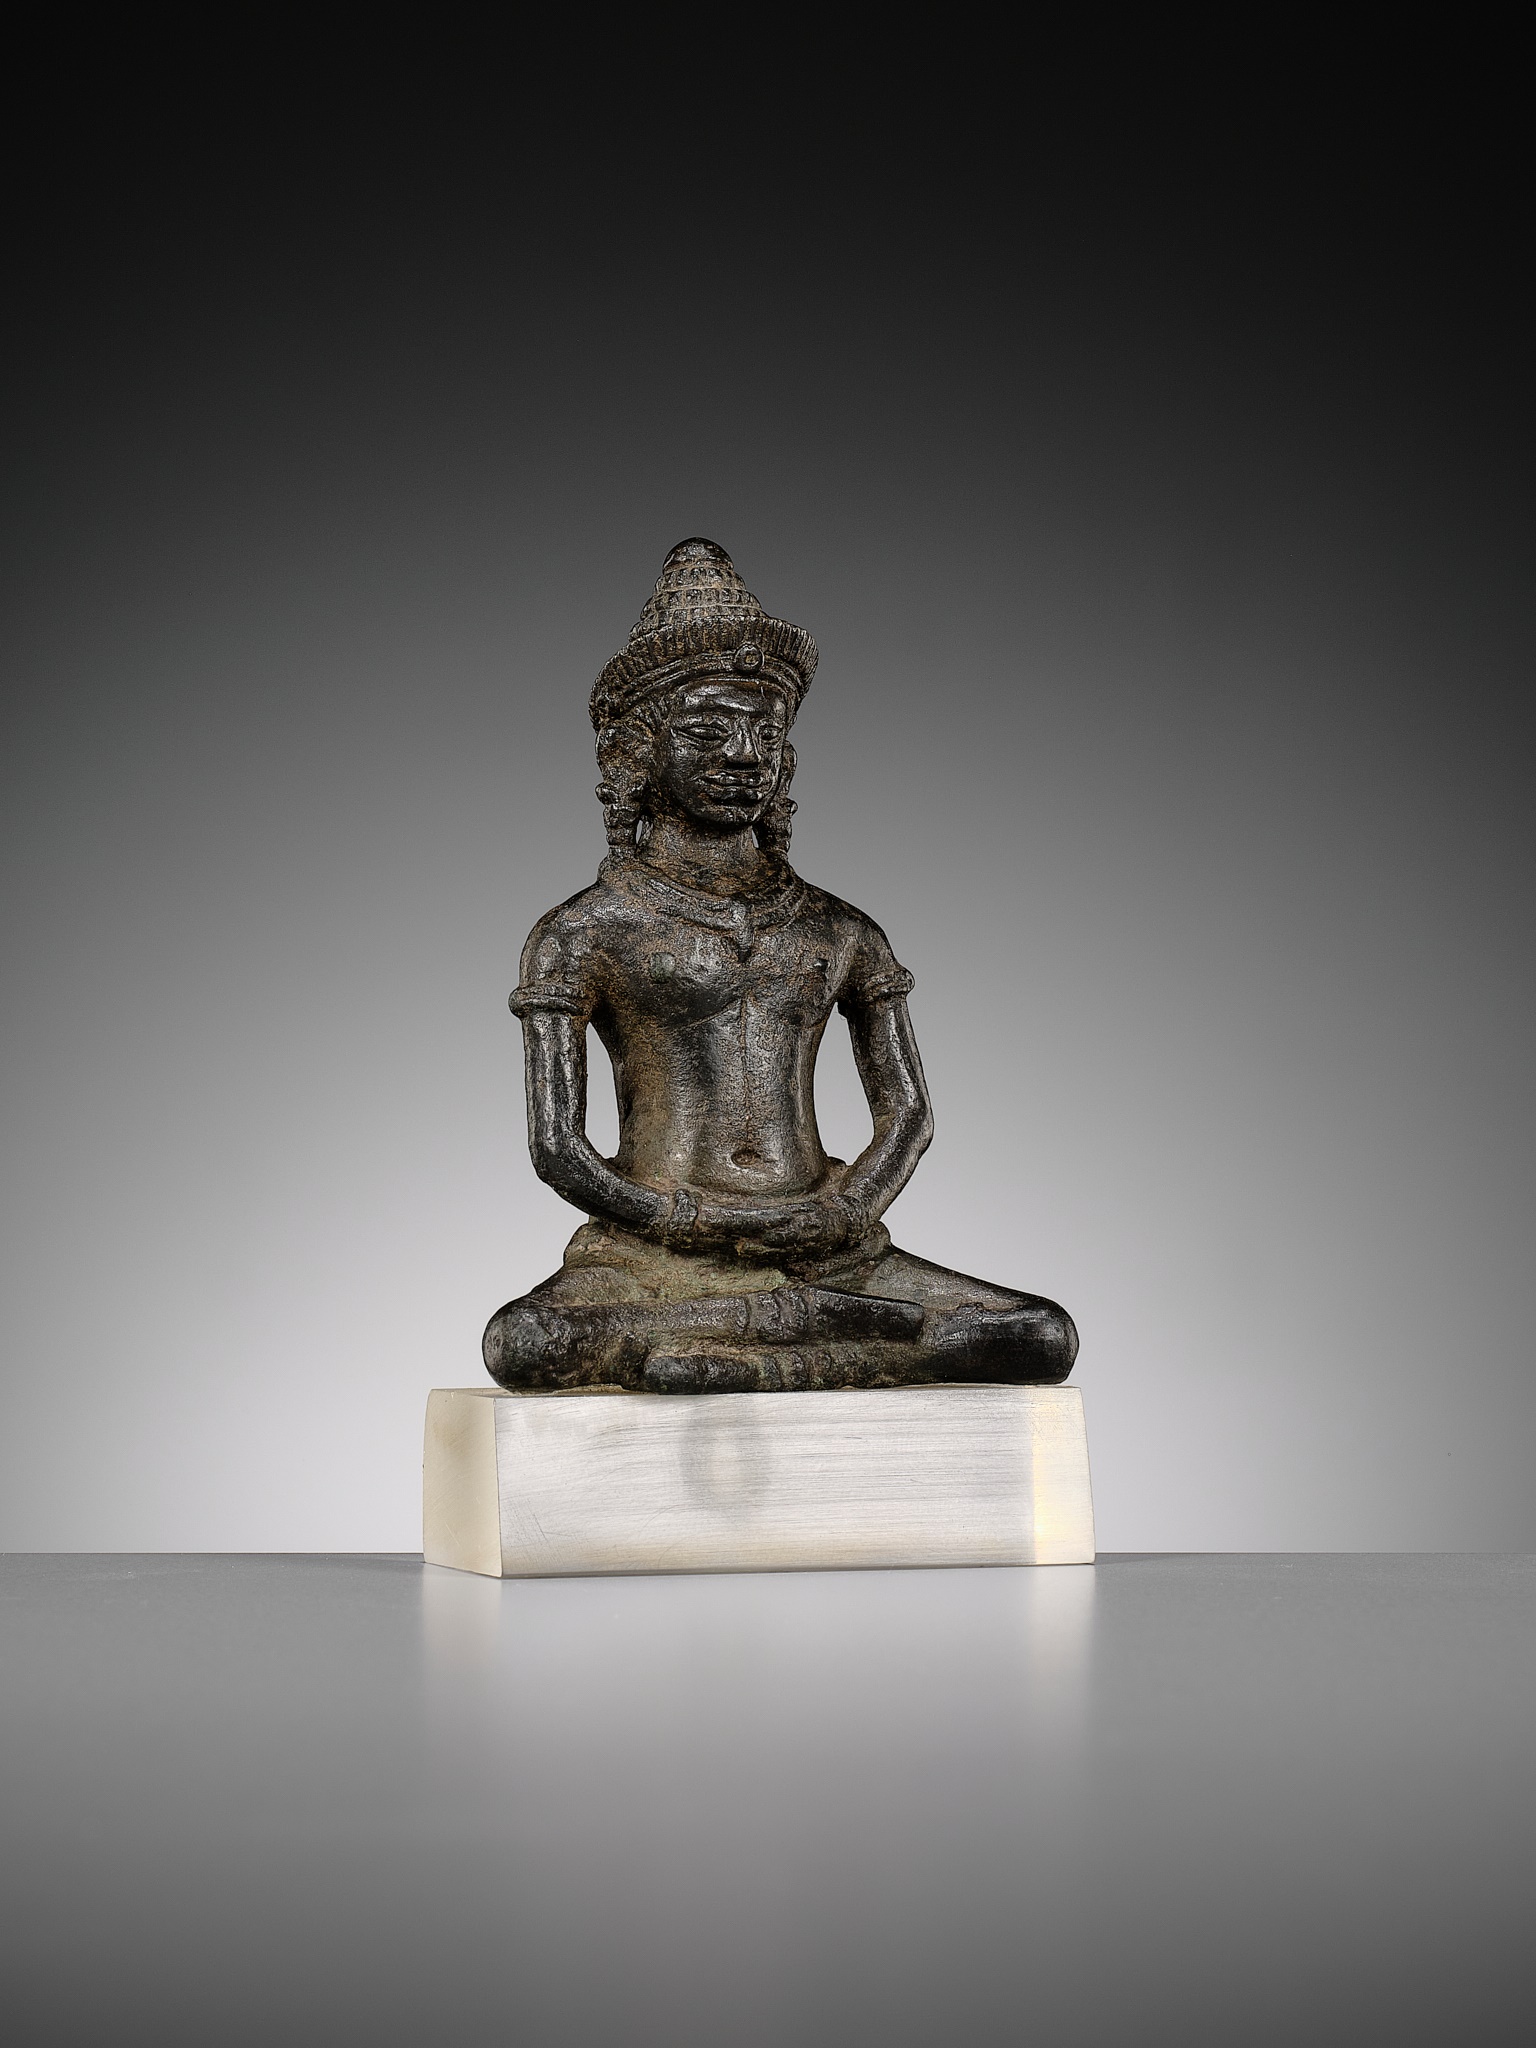 A BRONZE FIGURE OF BUDDHA, ANGKOR PERIOD, KHMER EMPIRE, 12TH CENTURY - Image 8 of 9